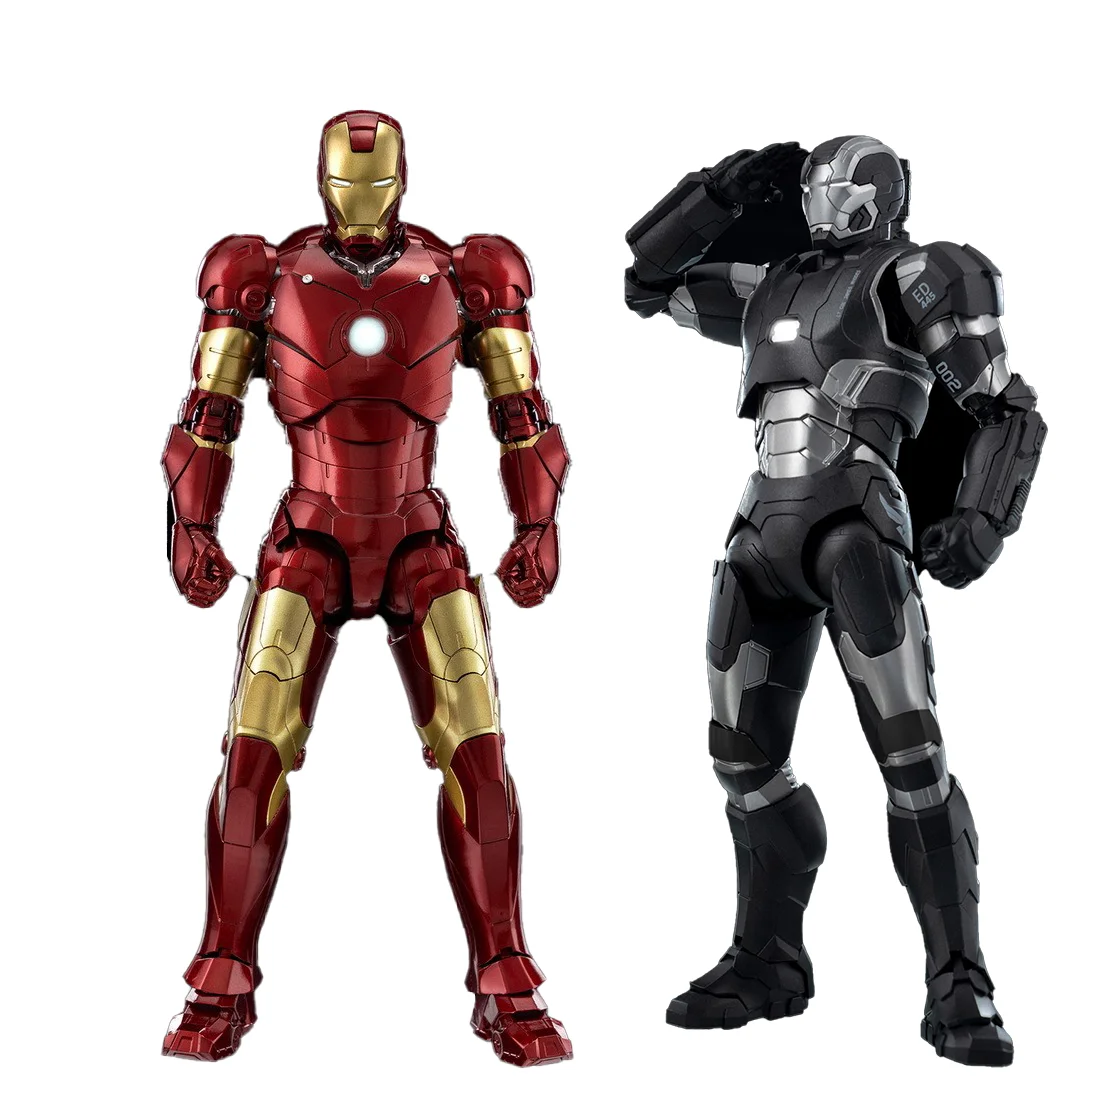 In Stock 100% Original Threezero 3A DLX Iron Man MK3 Wrr machime MK2 1/12 Movie Character Model Art Collection Toy Gift